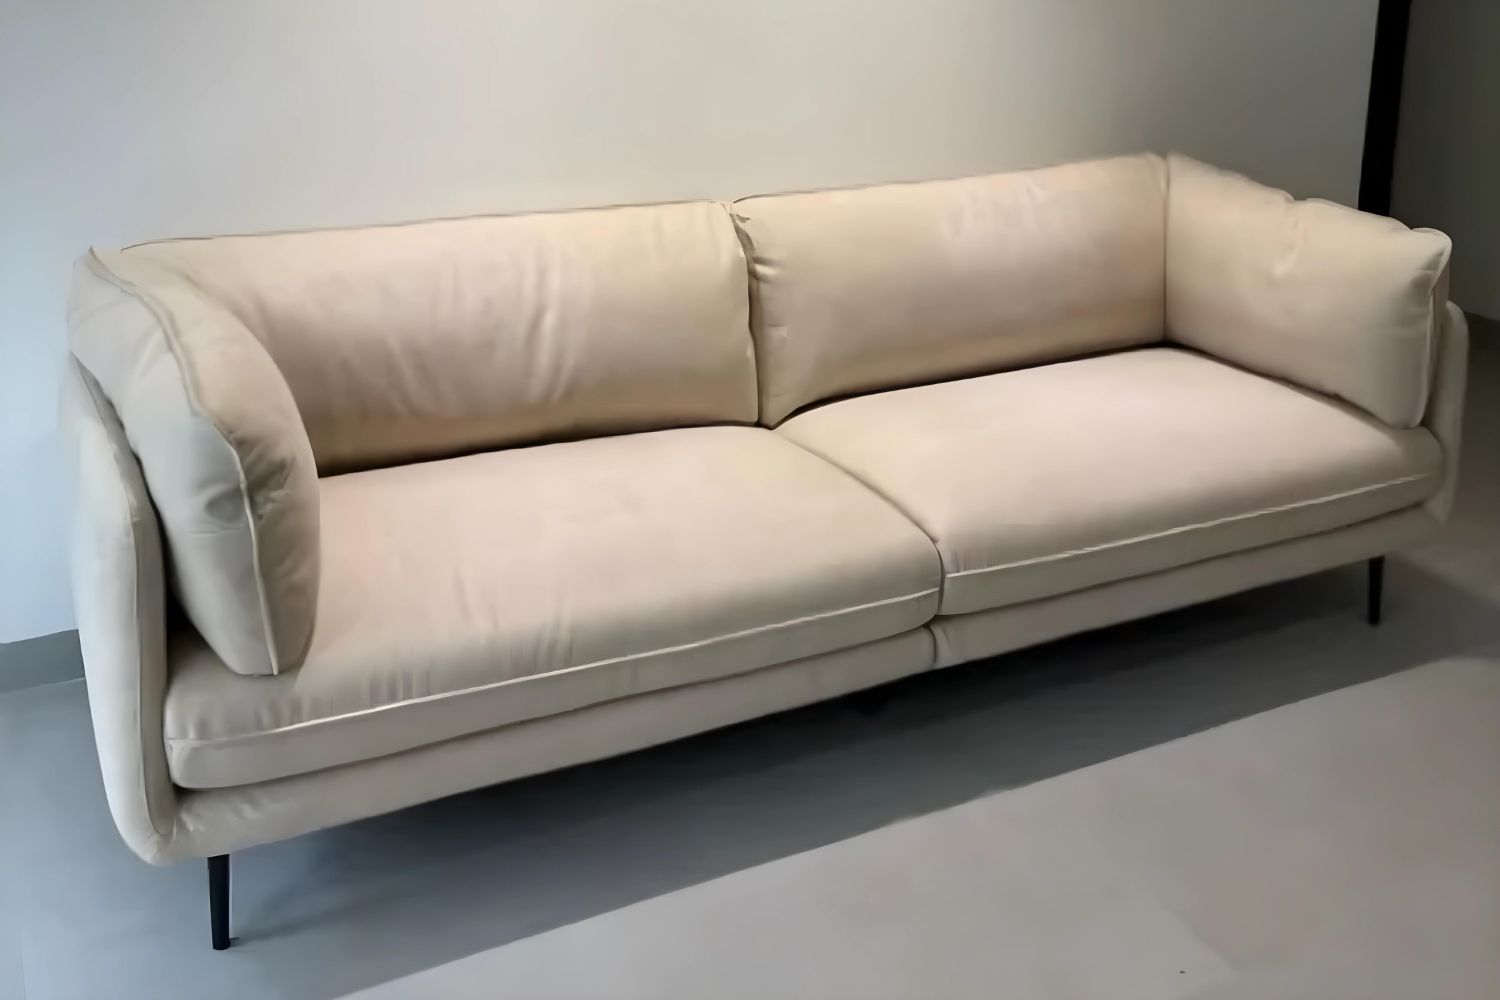 Cuddle white fabric sofa in customer's home